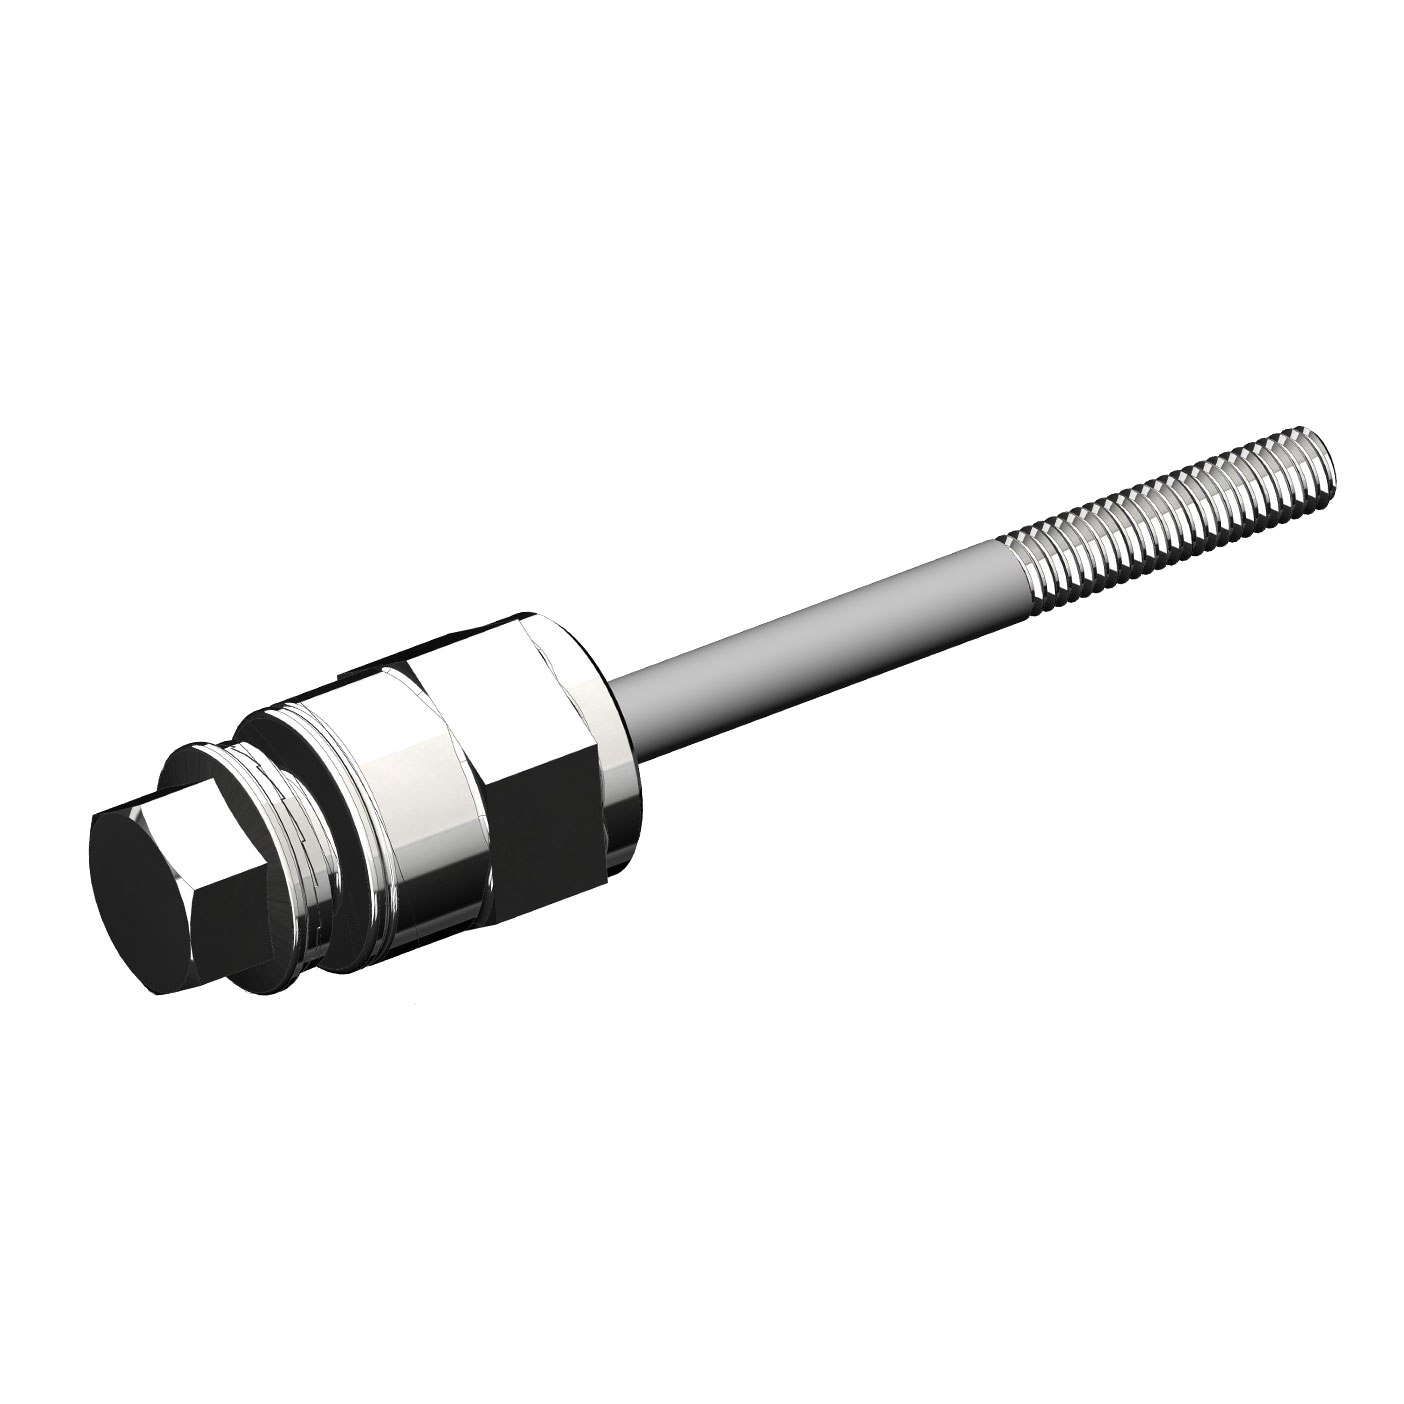 Productfoto van Croozer Axle Nut Adapter for Enviolo CA / SP Internal Gear Hubs - 12x142/148mm